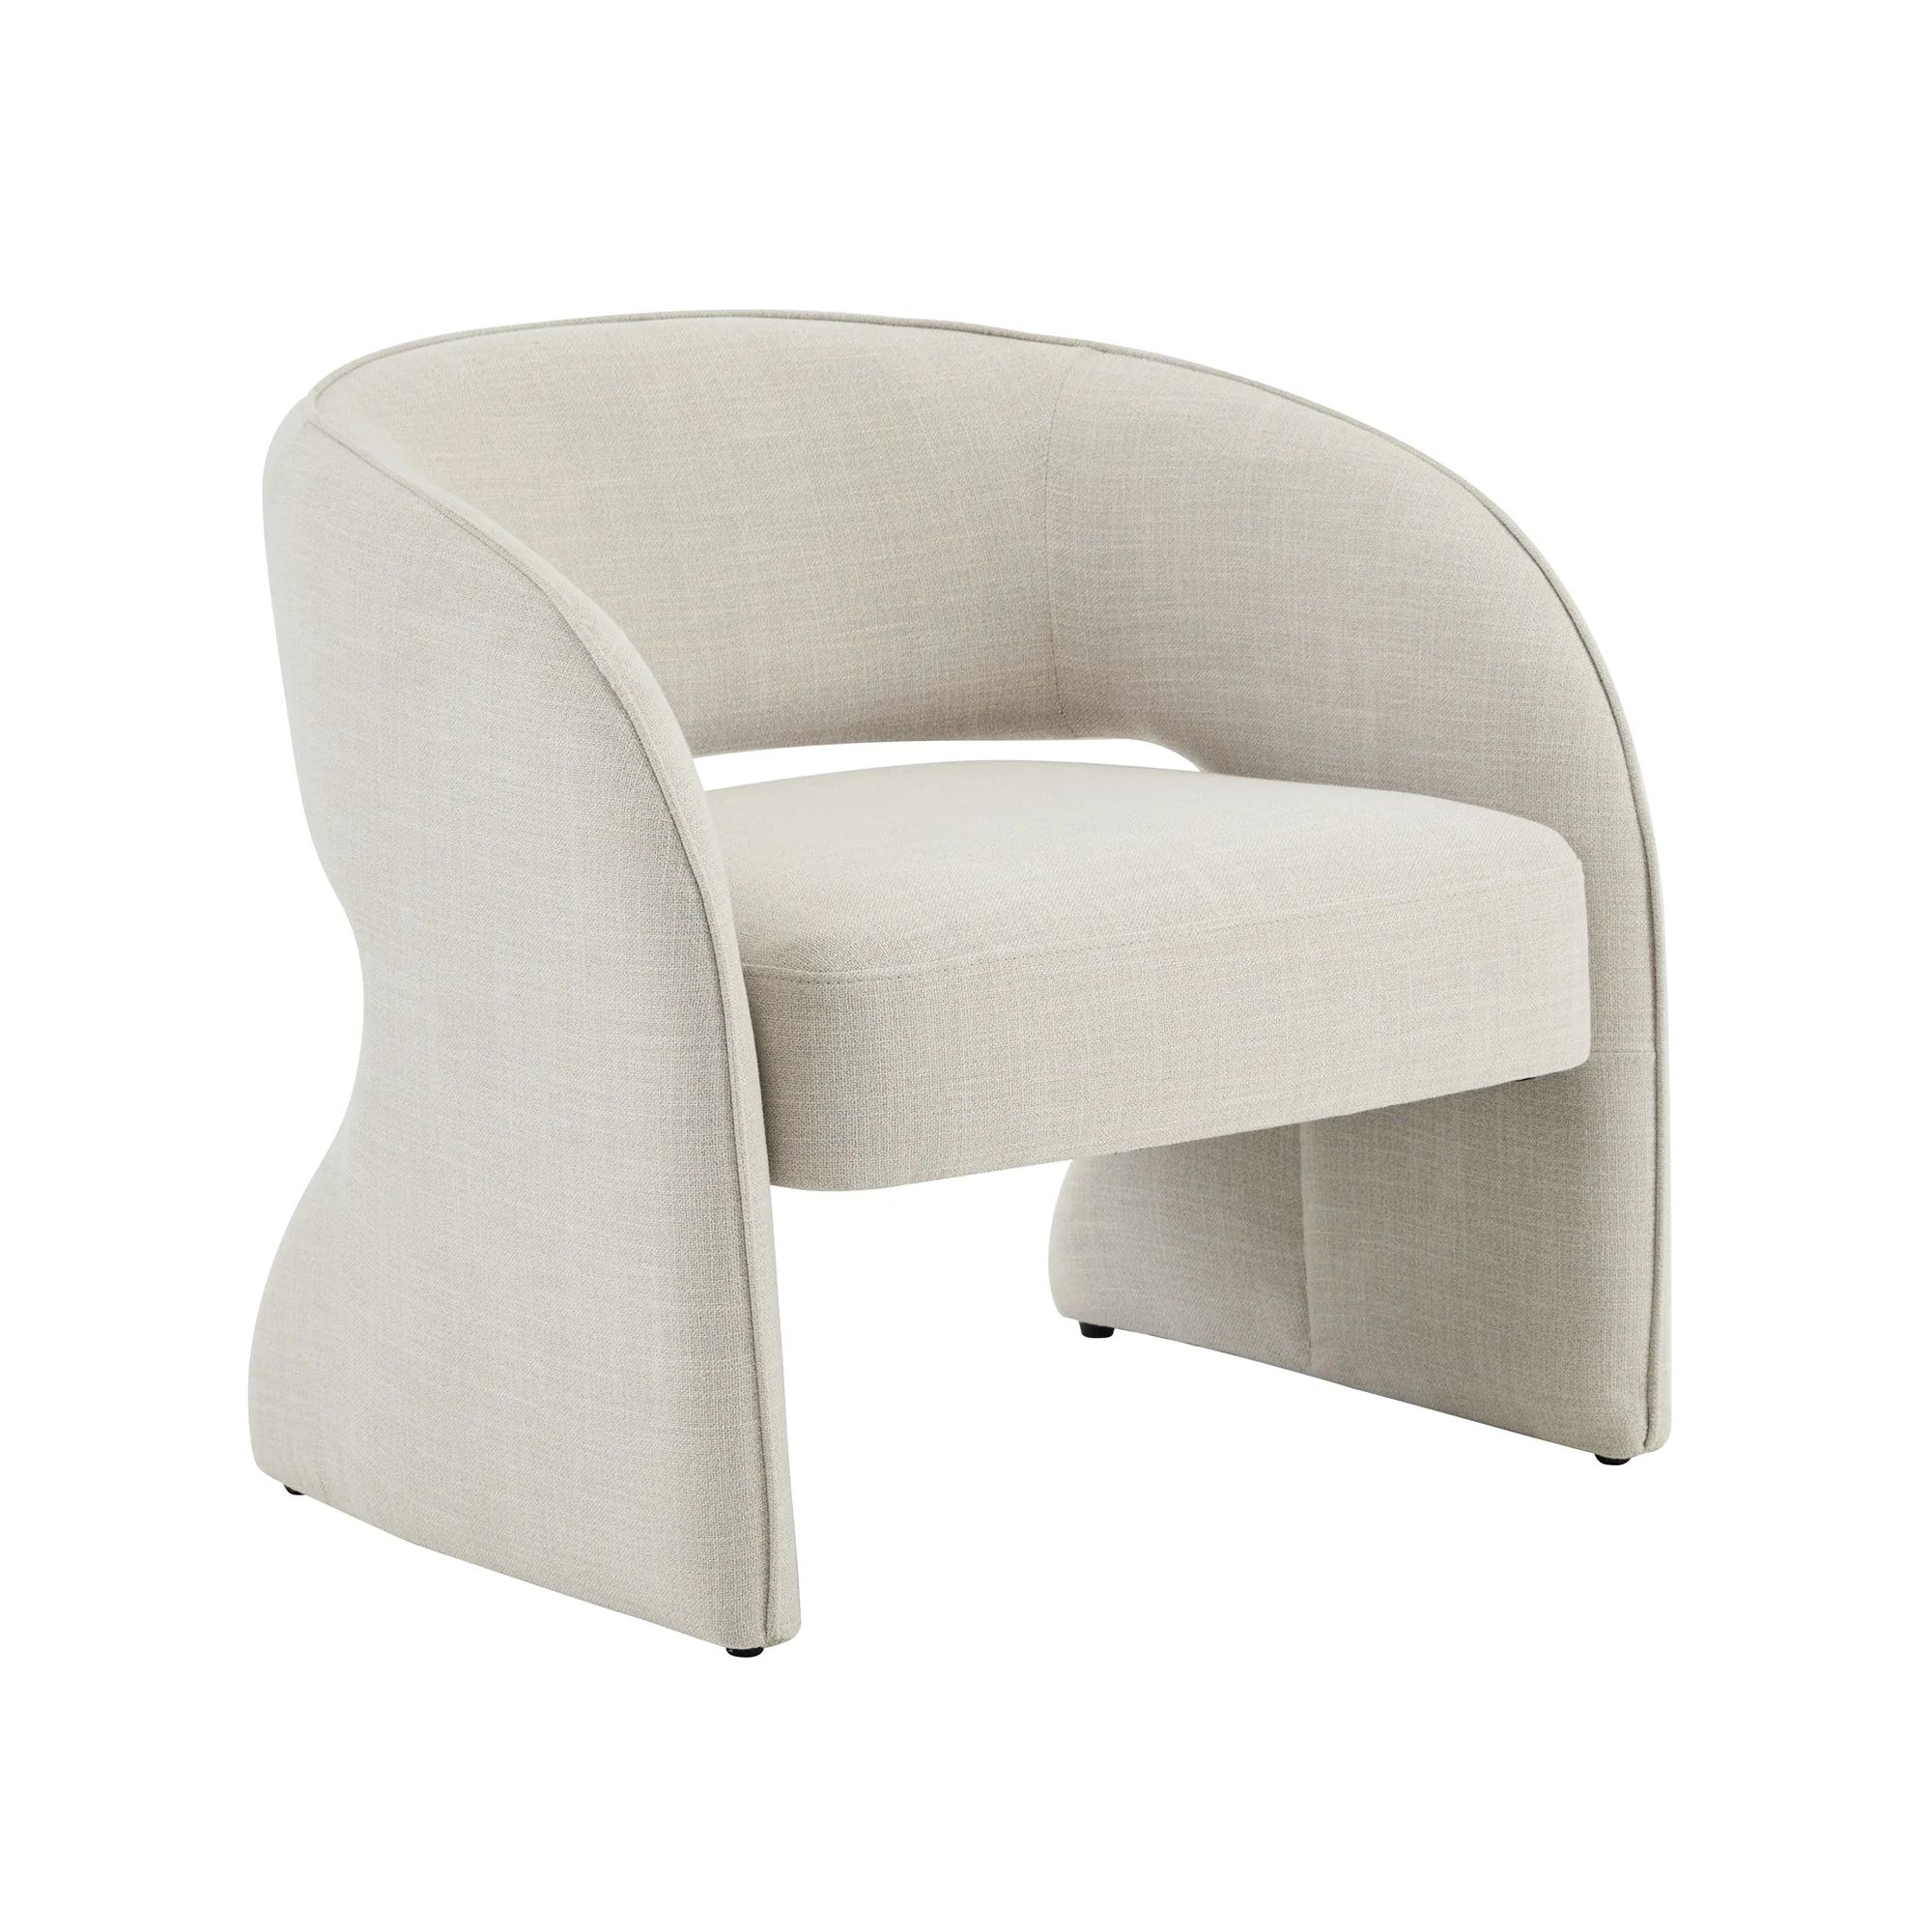 CHITA®️ Reya Modern Curved Accent Chair - chitaliving.com | Chita